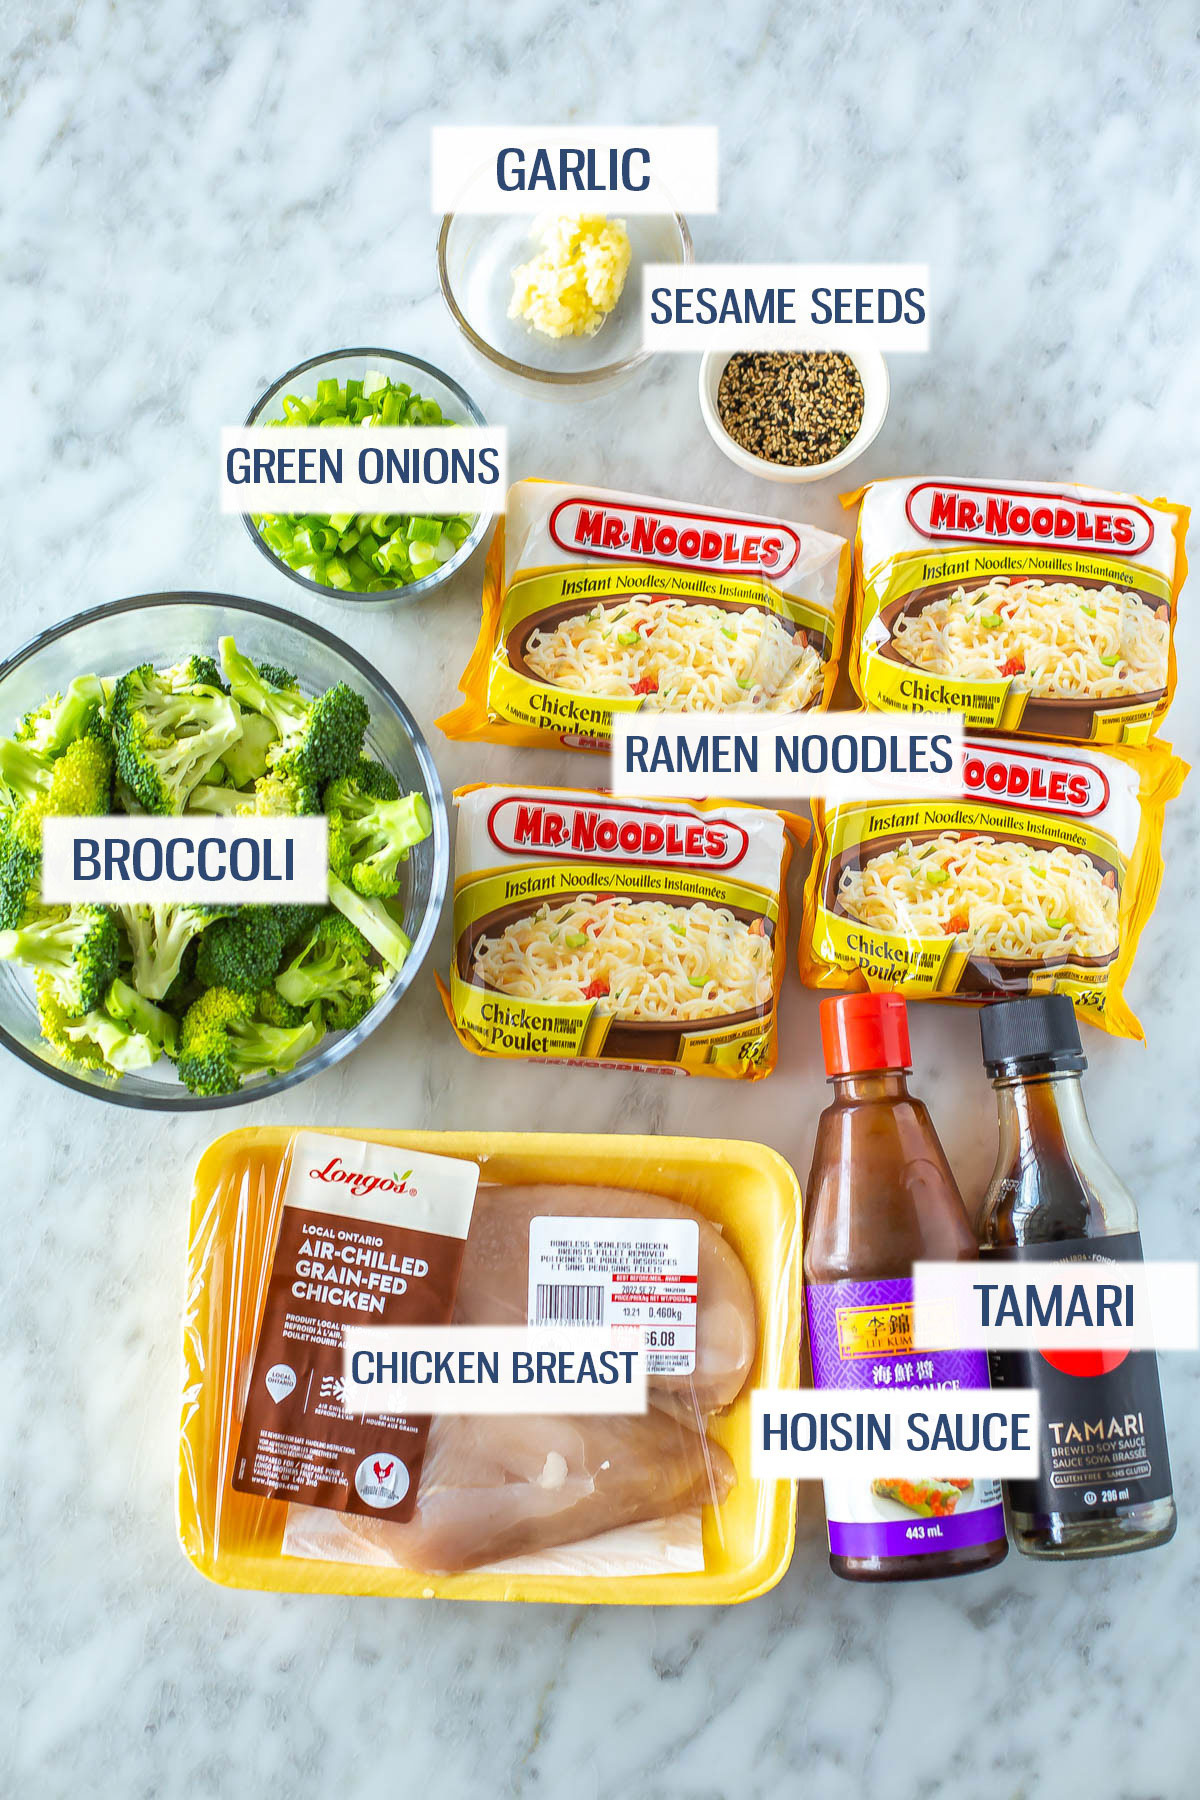 Ingredients for chicken ramen stir fry: ramen noodles, garlic, sesame seeds, green onions, broccoli, chicken, hoisIn sauce and tamari.